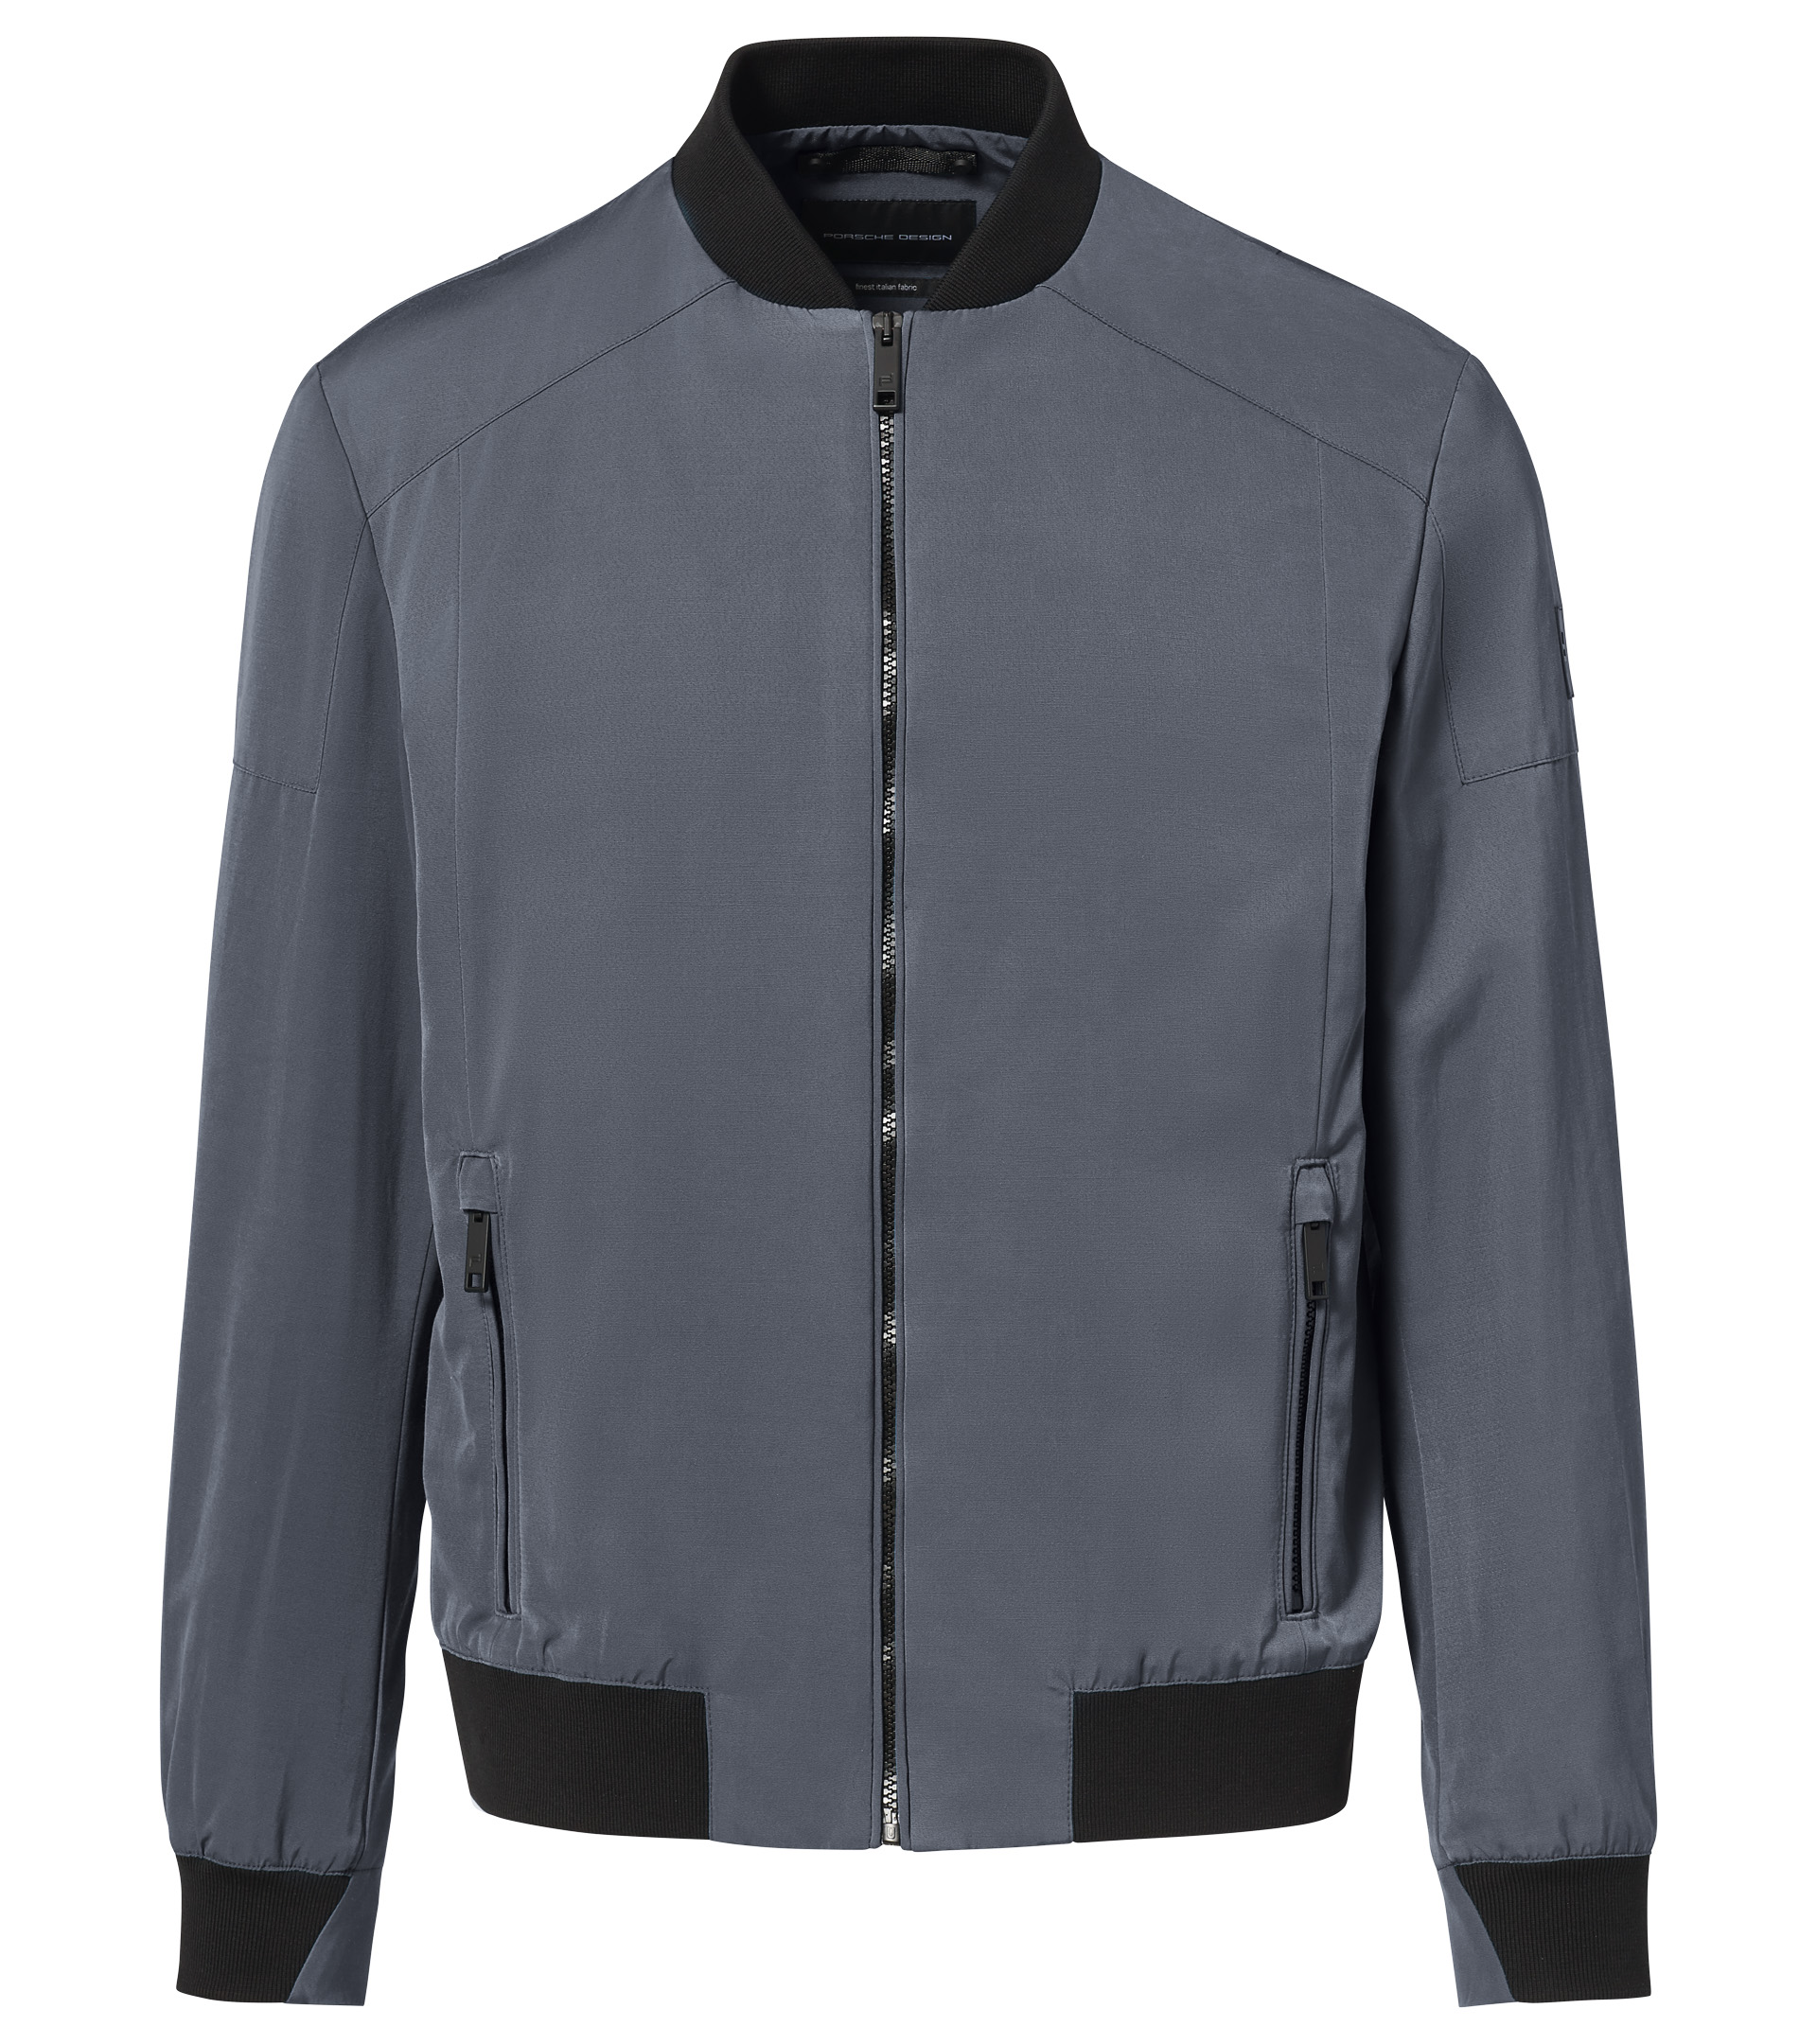 Universal Blouson - Designer Men's Jackets & Coats | Porsche